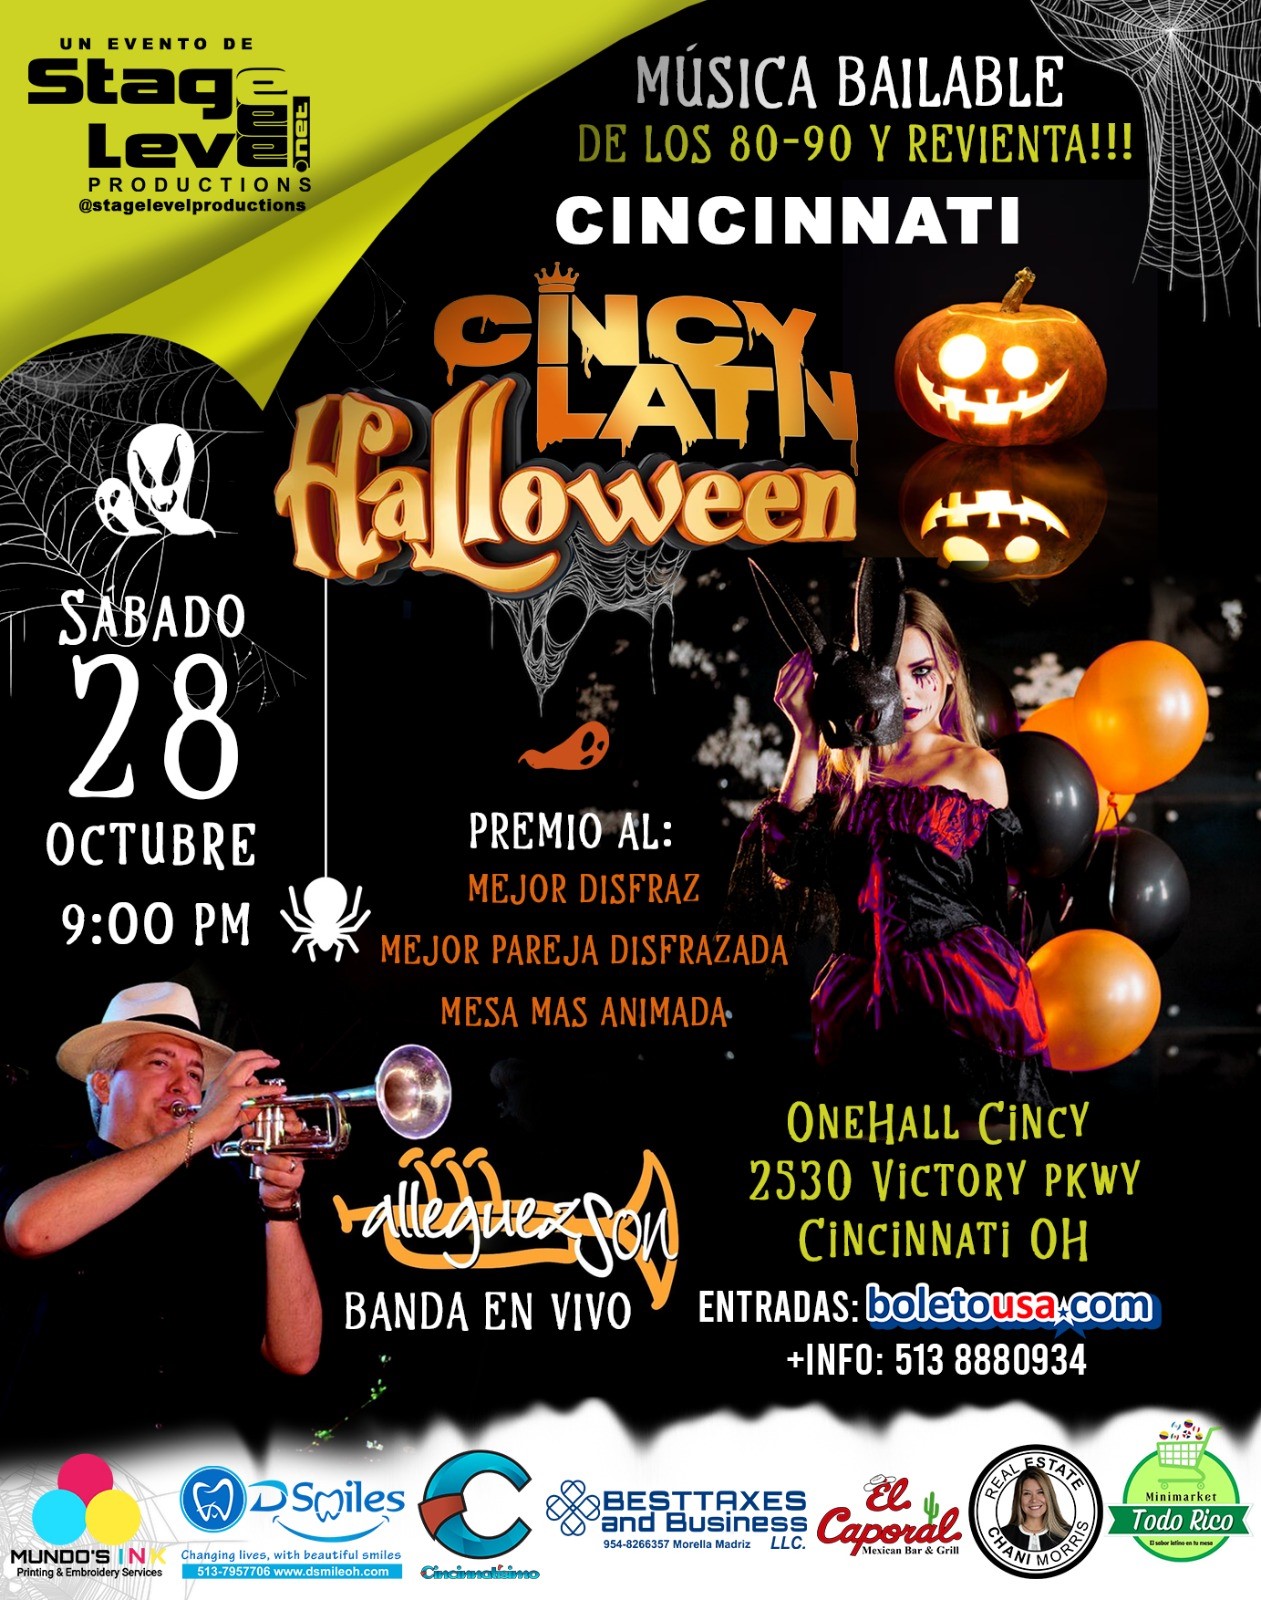 Cincy Latin Halloween Joel Alleguez con su Banda en Vivo !!! on Oct 28, 21:00@One Hall Cincy - Pick a seat, Buy tickets and Get information on stagelevel net stagelevel.net